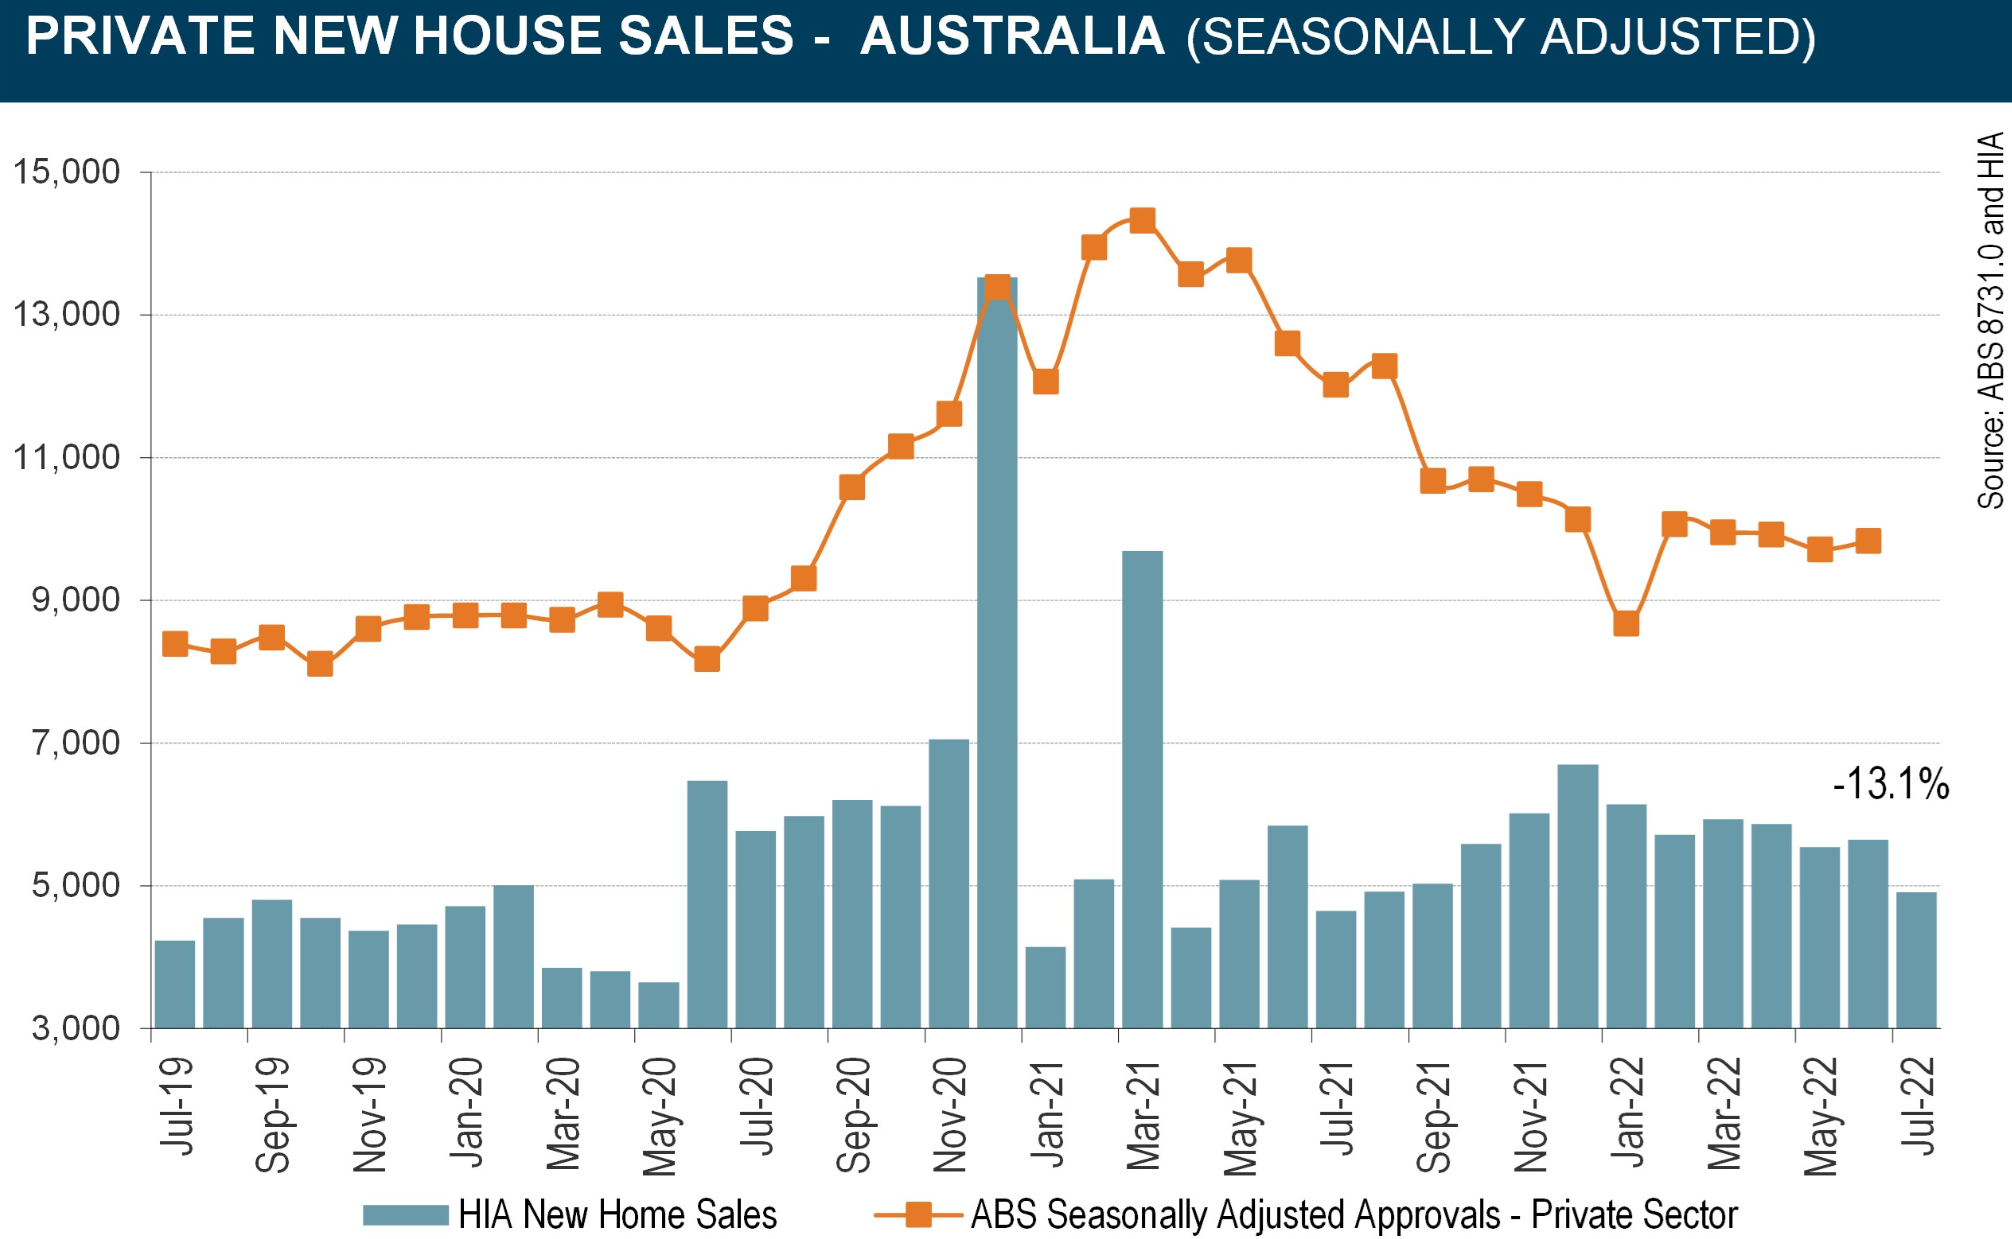 HIA new home sales